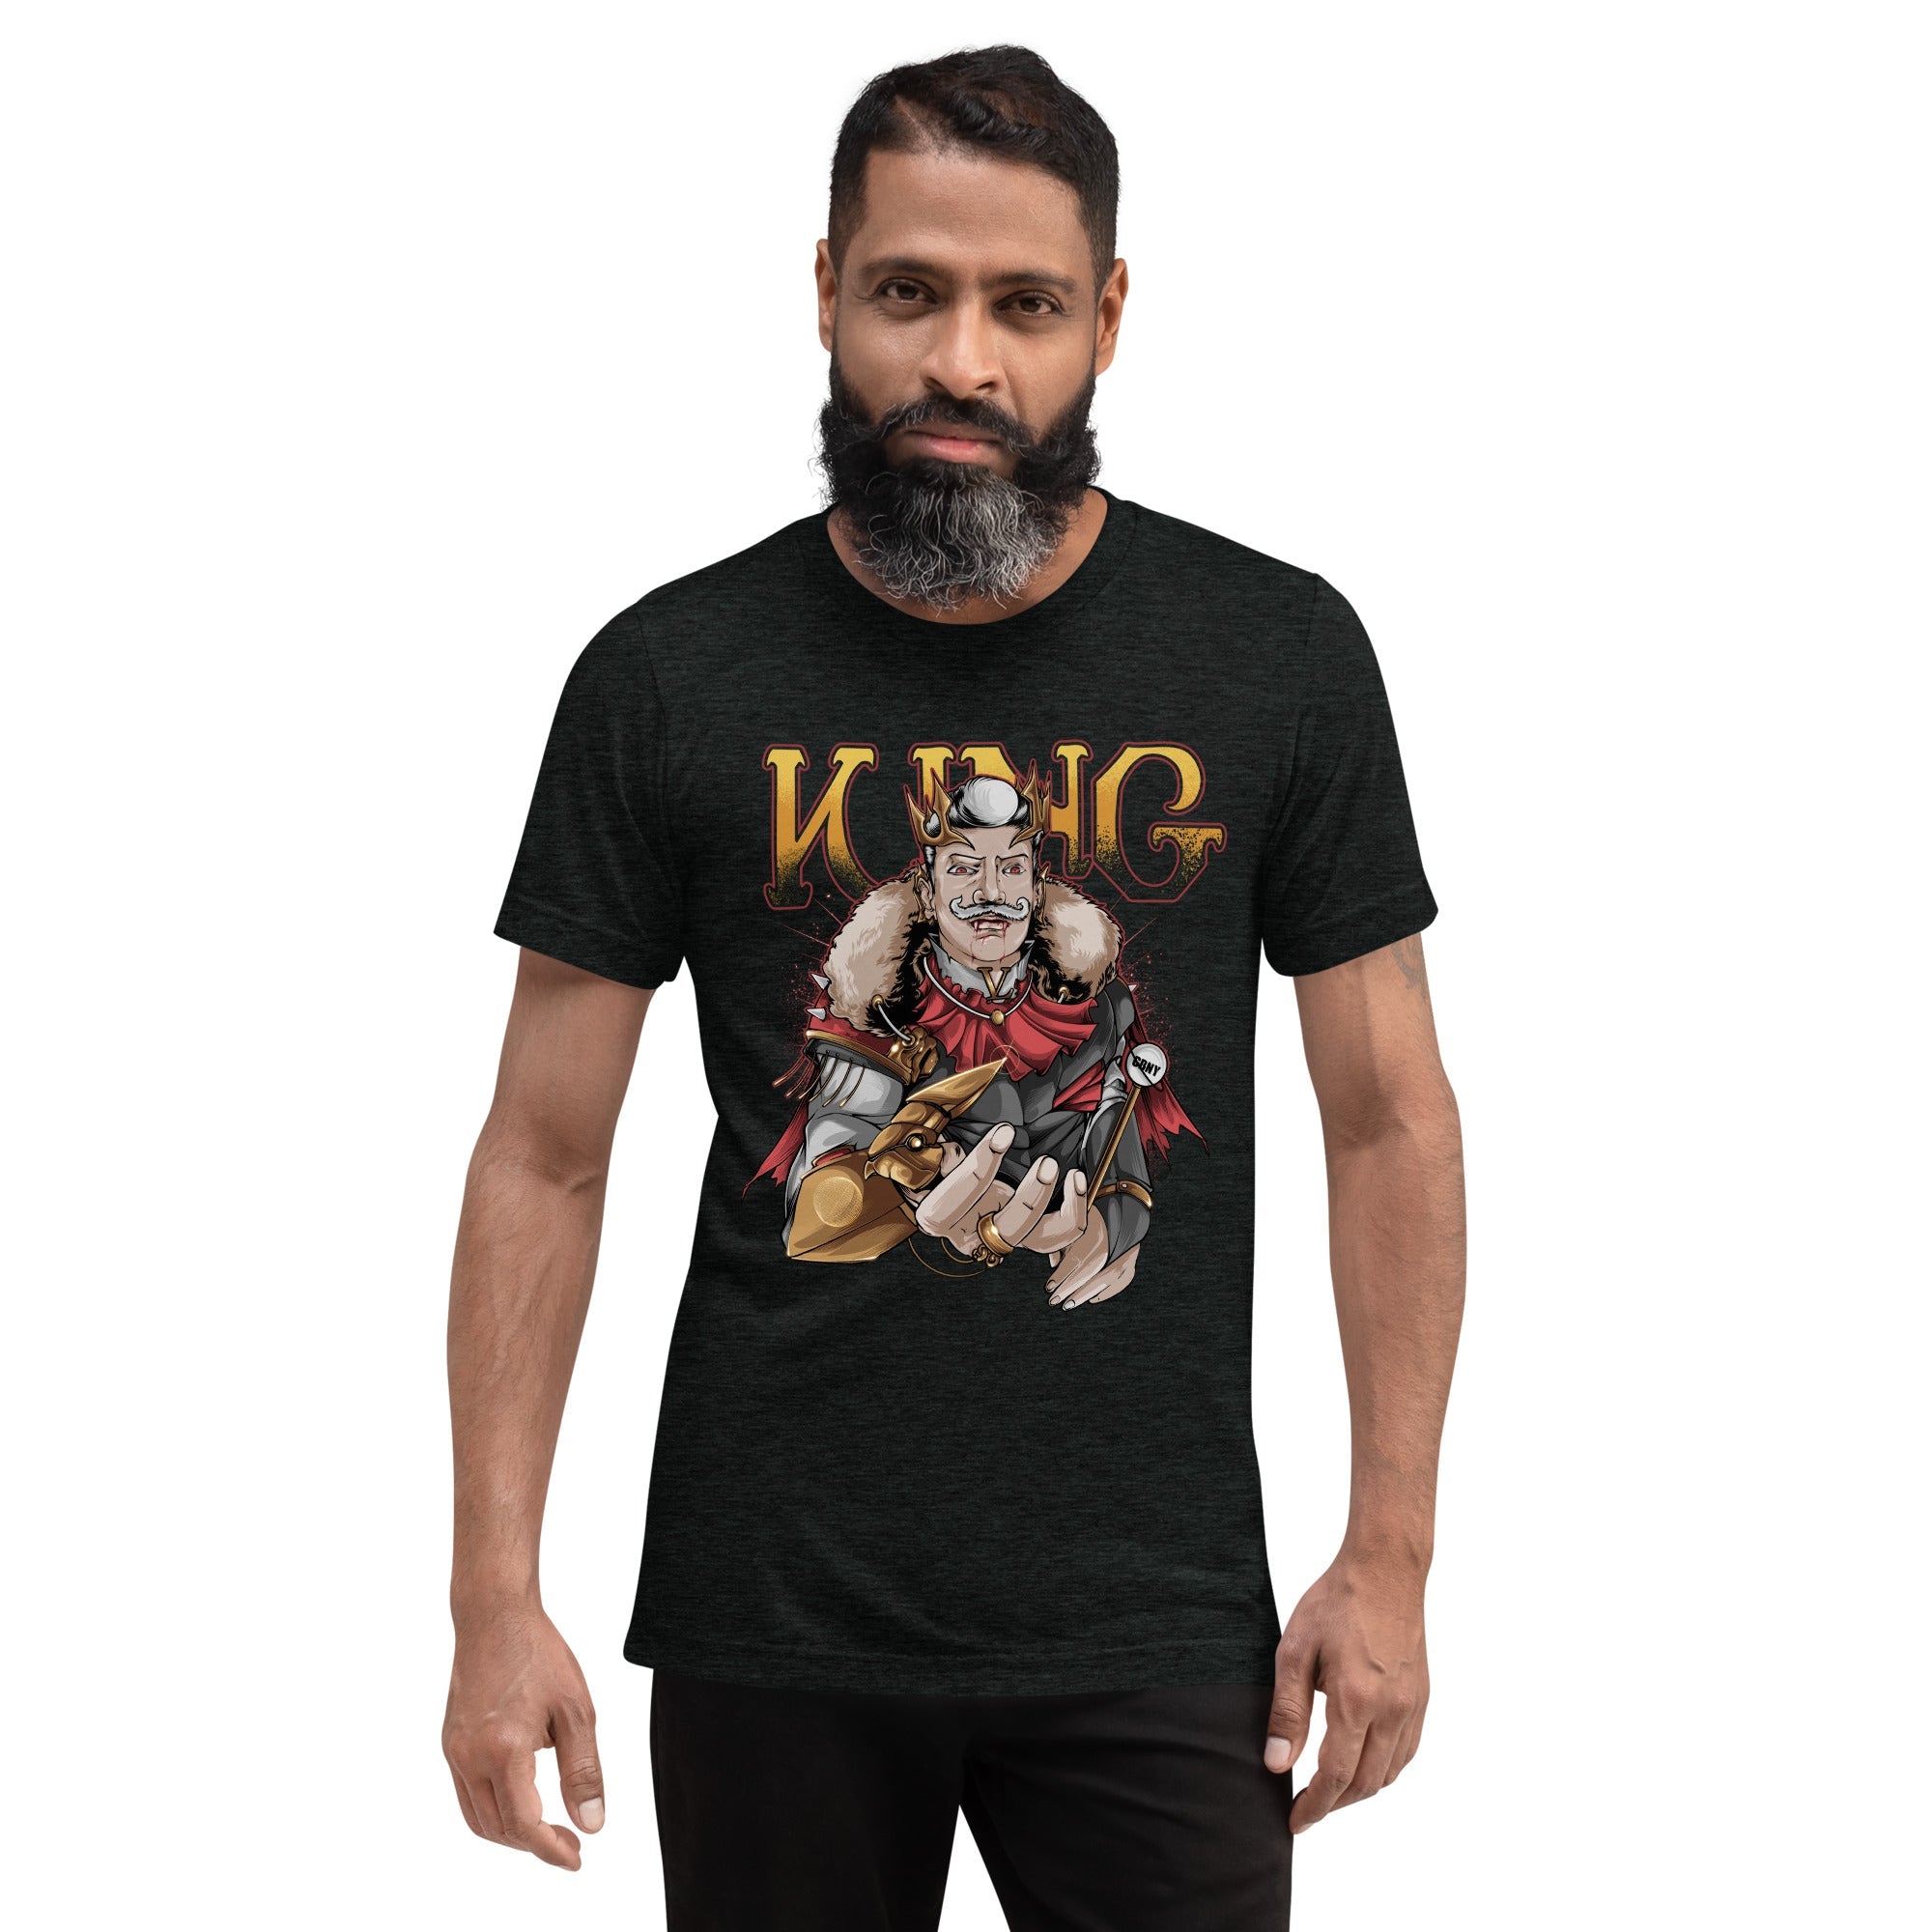 GBNY Vamp Life X GBNY "Vamp King" T-shirt - Men's